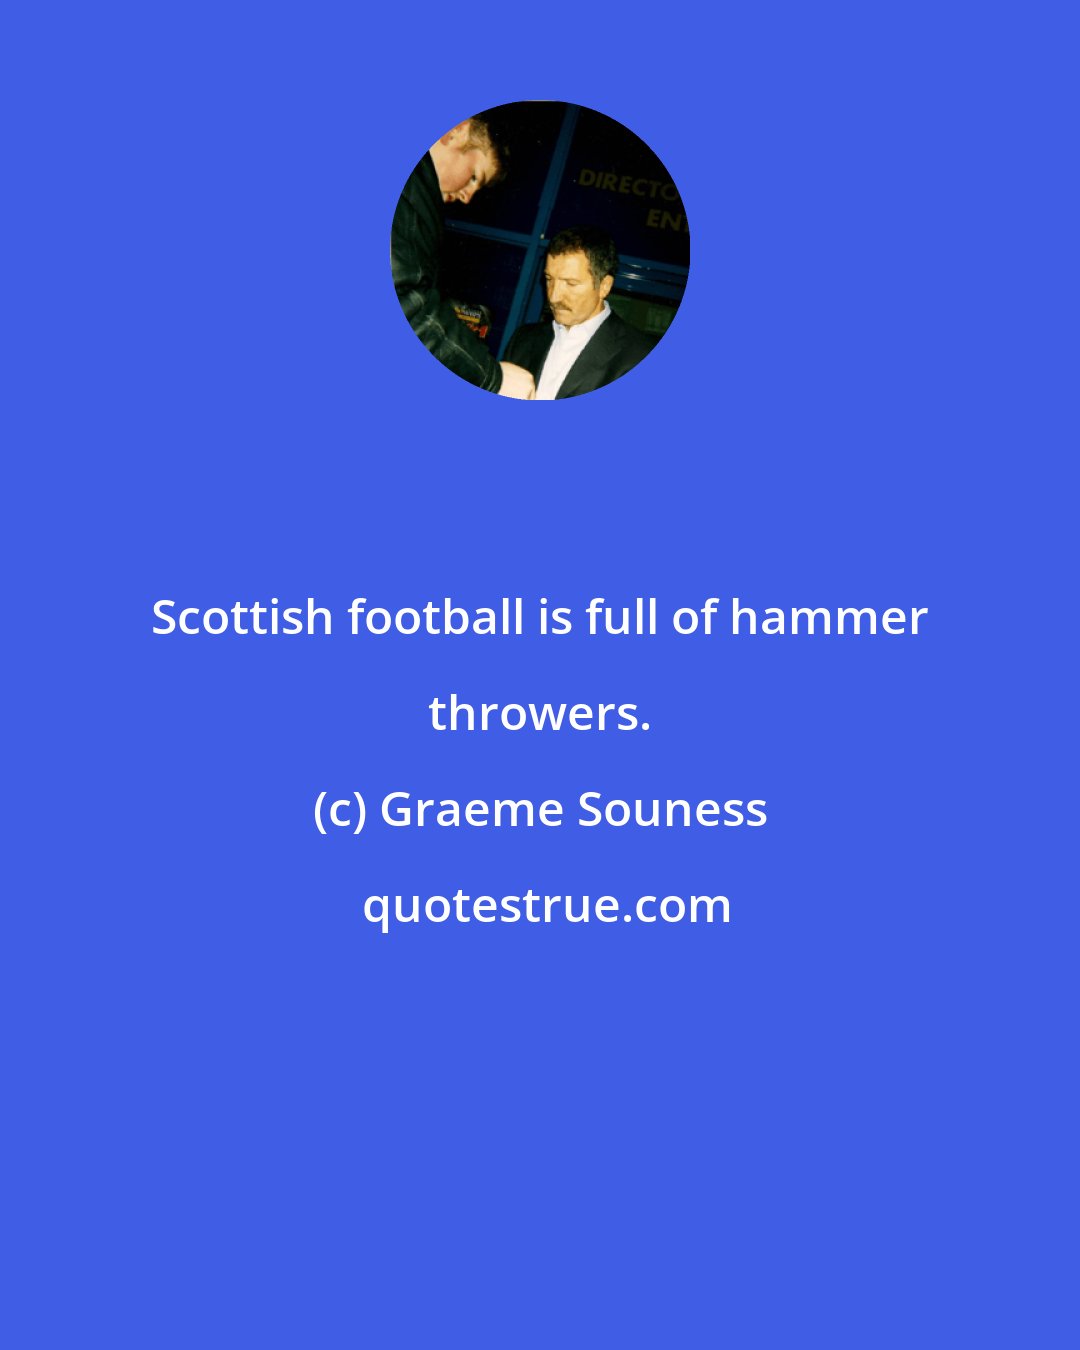 Graeme Souness: Scottish football is full of hammer throwers.